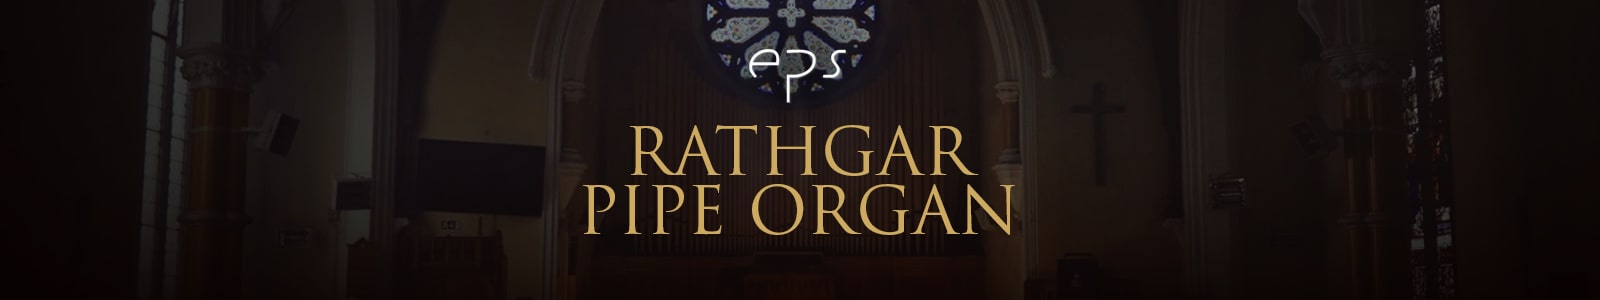 rathgar pipe organ